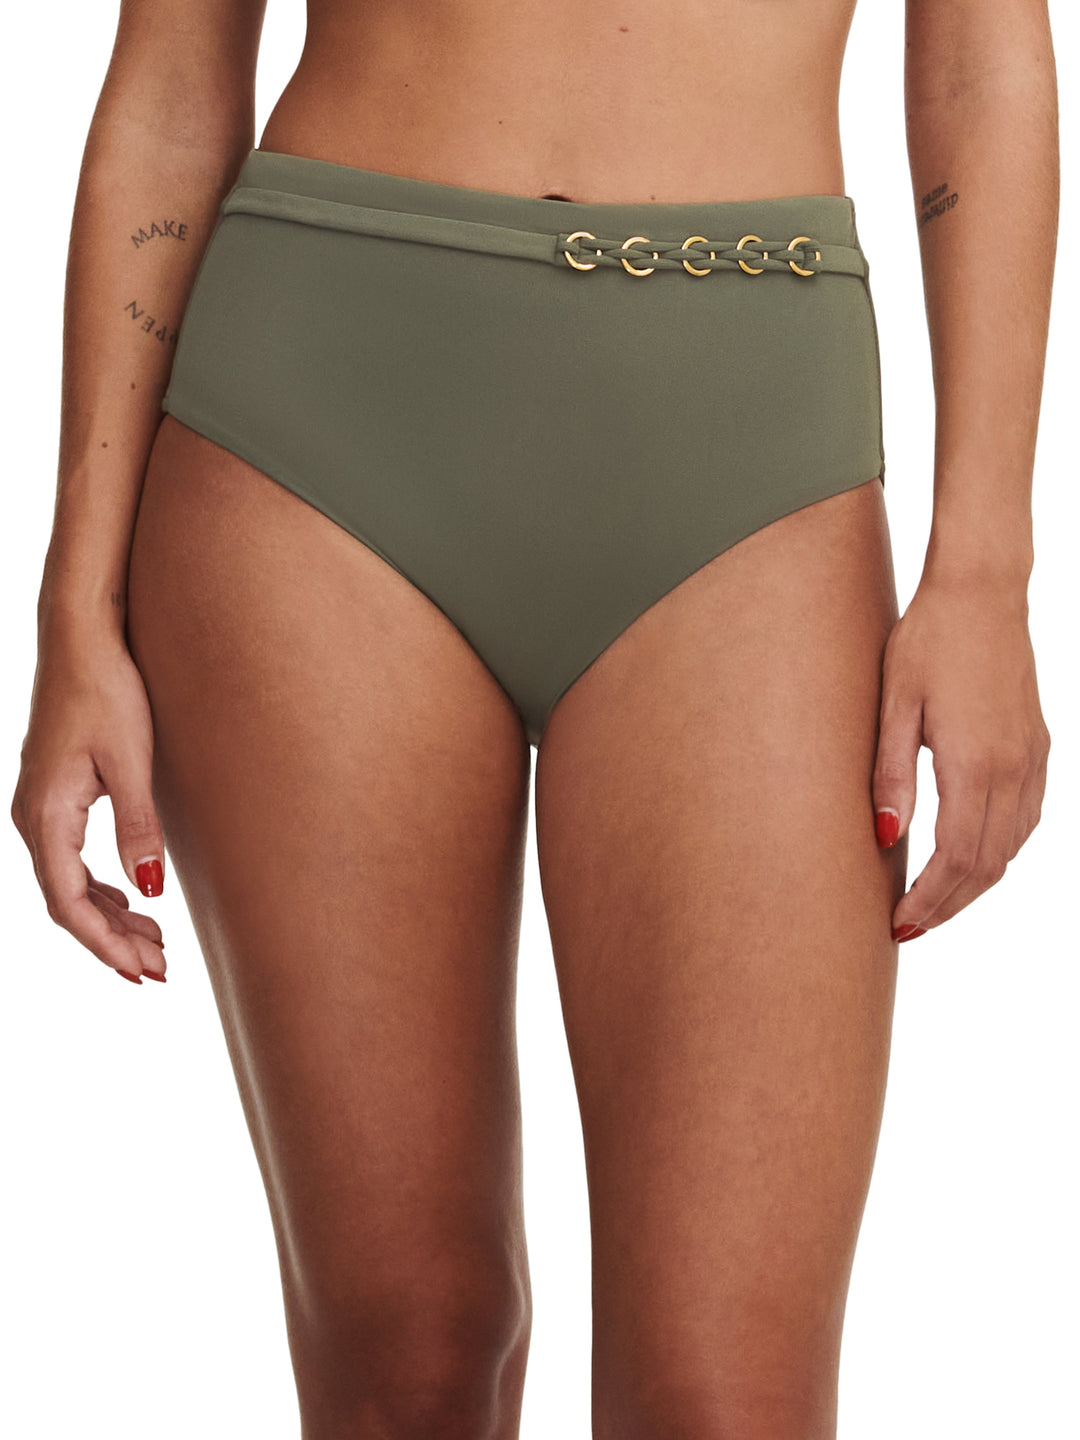 Chantelle Swimwear Emblem フルビキニブリーフ - Khaki Green Full Bikini Brief Chantelle